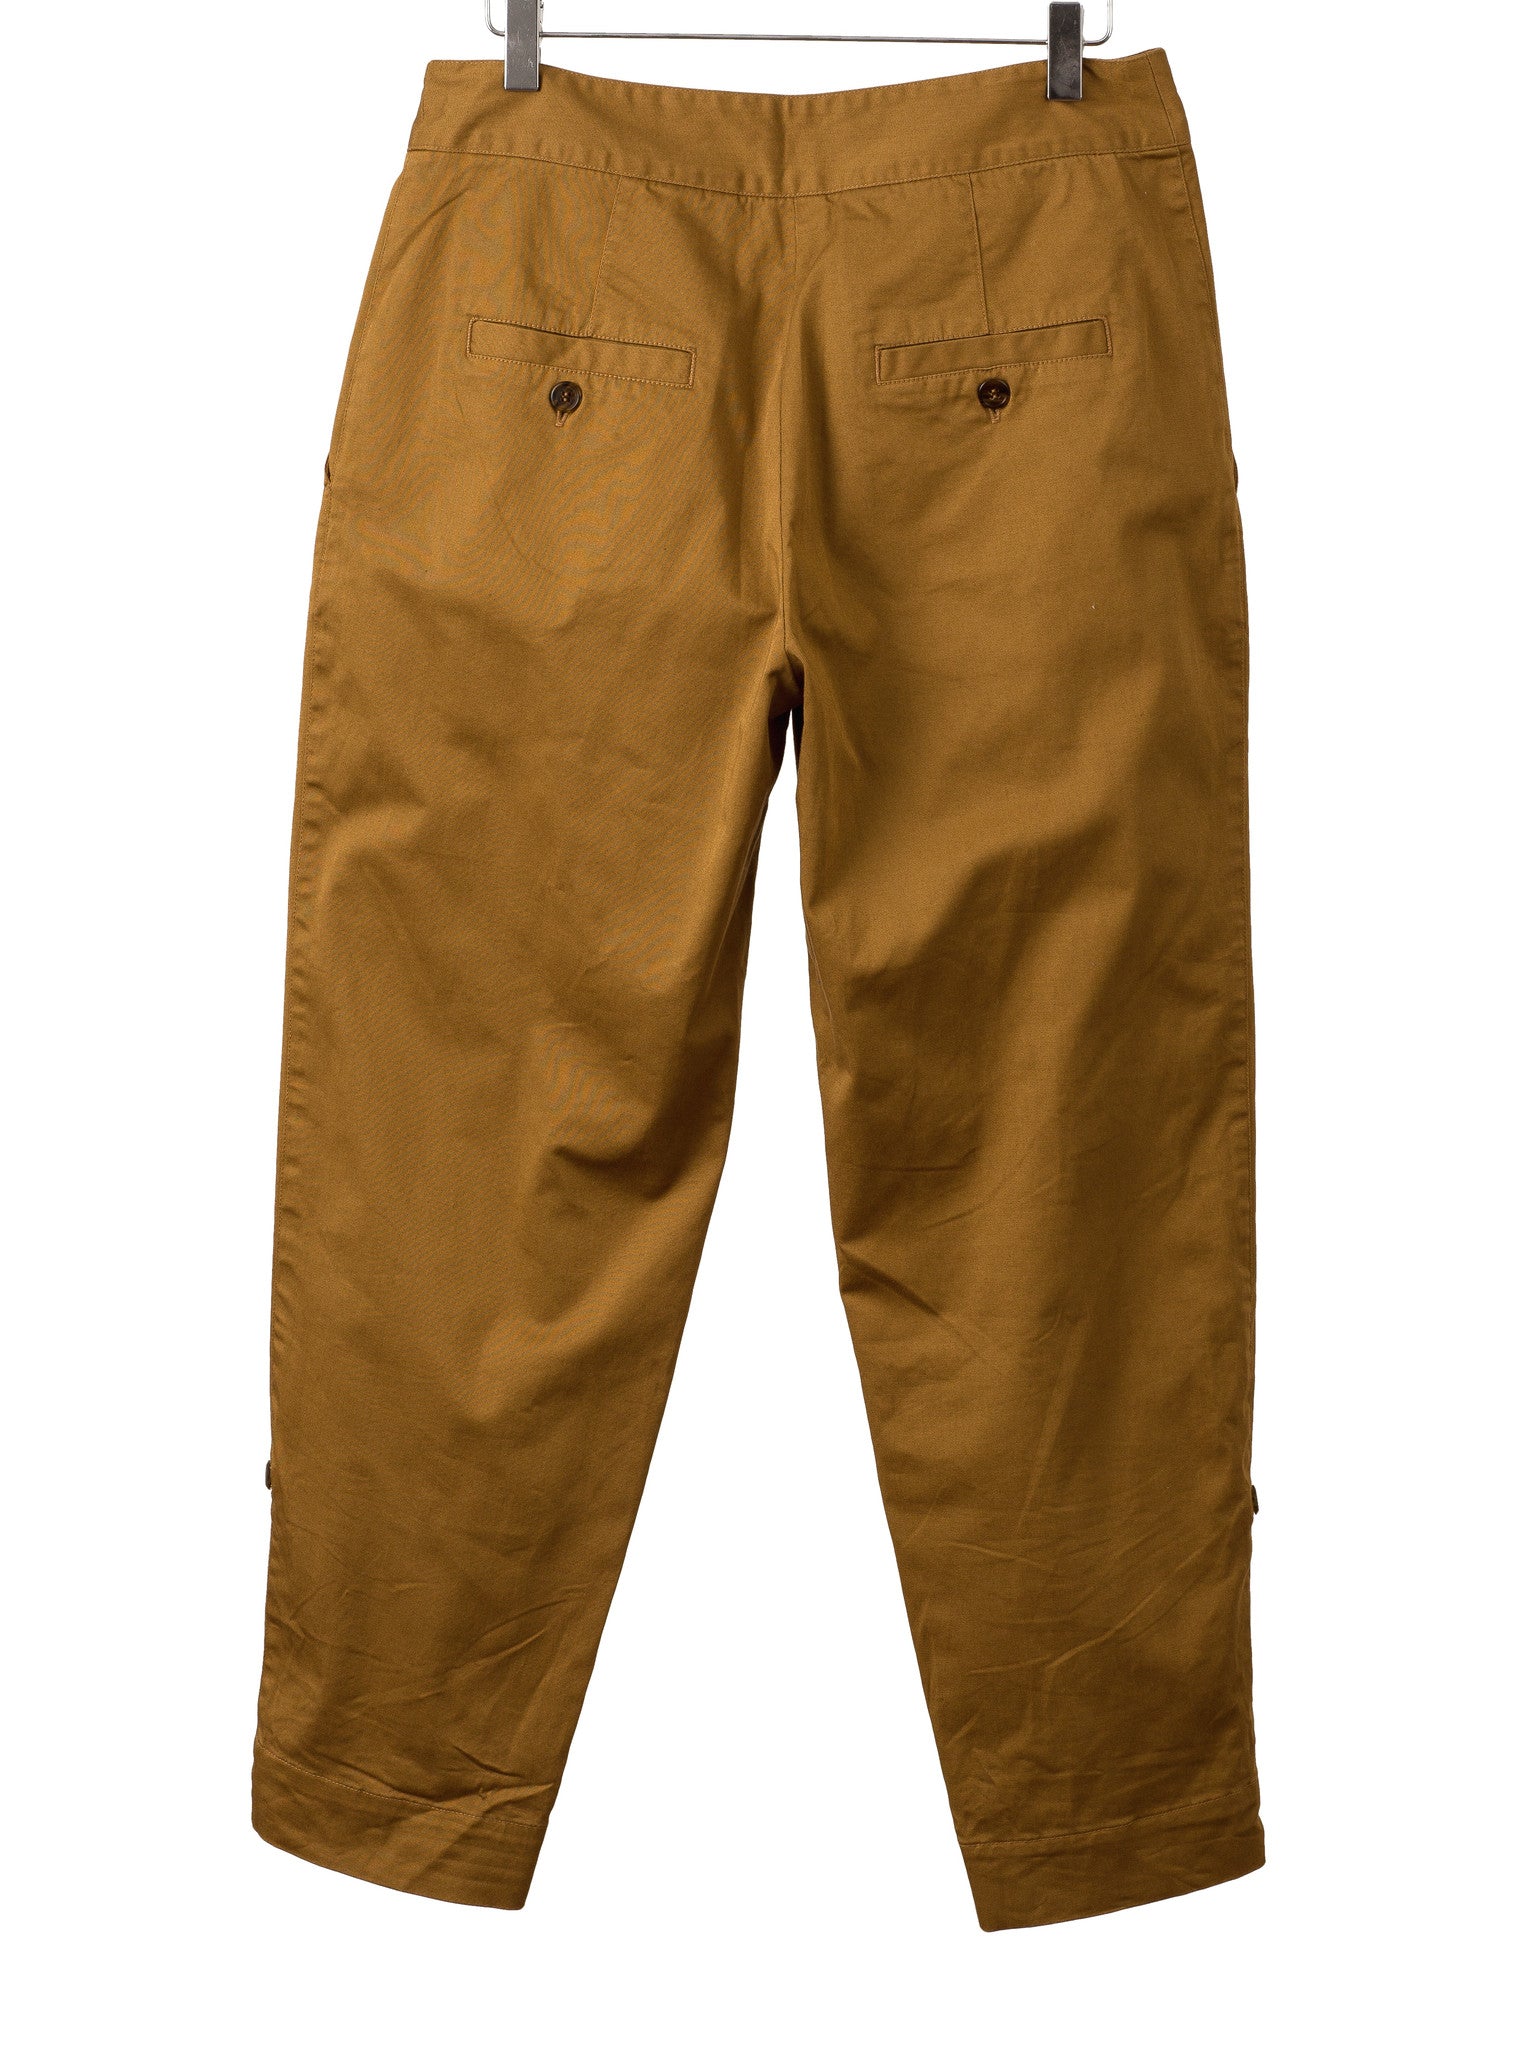 DARK KHAKI PLEAT FRONT PANTS, Trousers, Hickman & Bousfield - Hickman & Bousfield, Safari and Travel Clothing